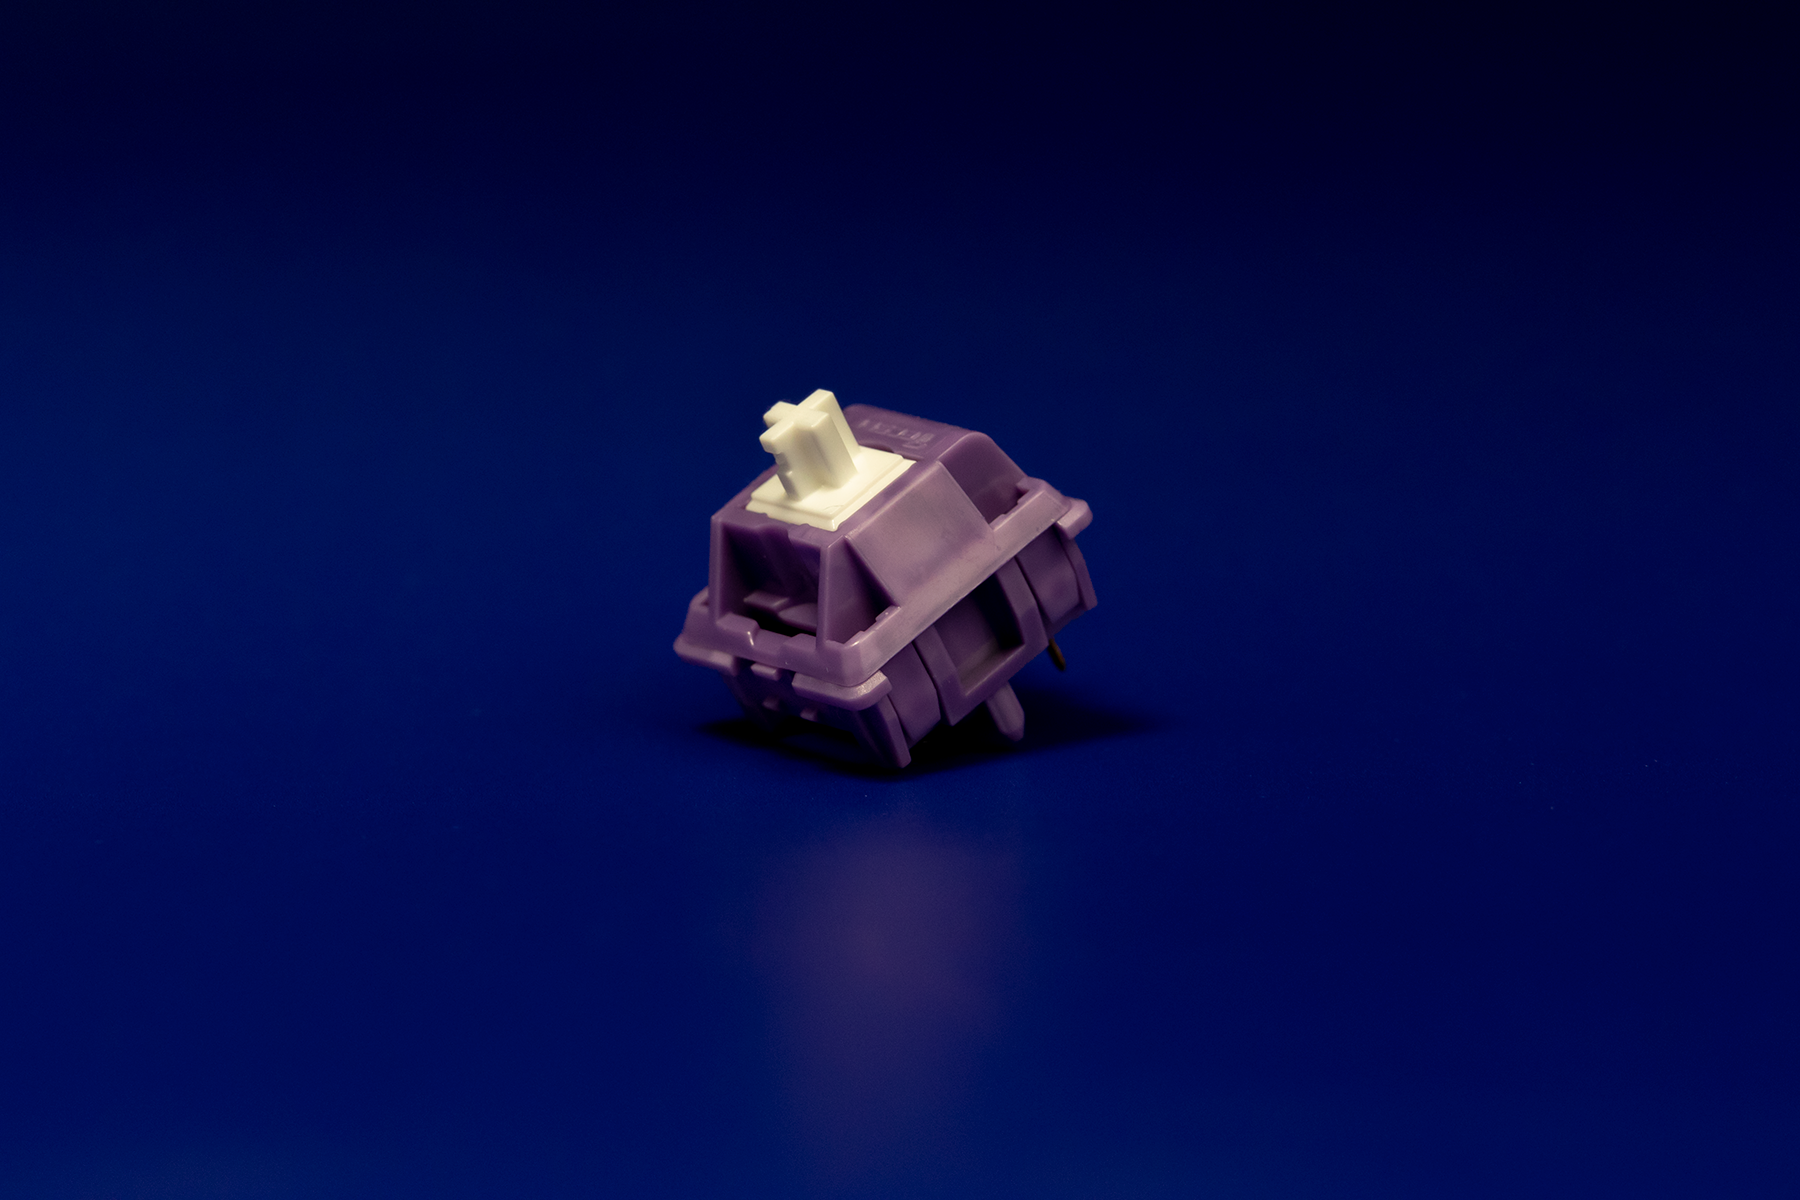 Tecsee Purple Panda Switches (x10)